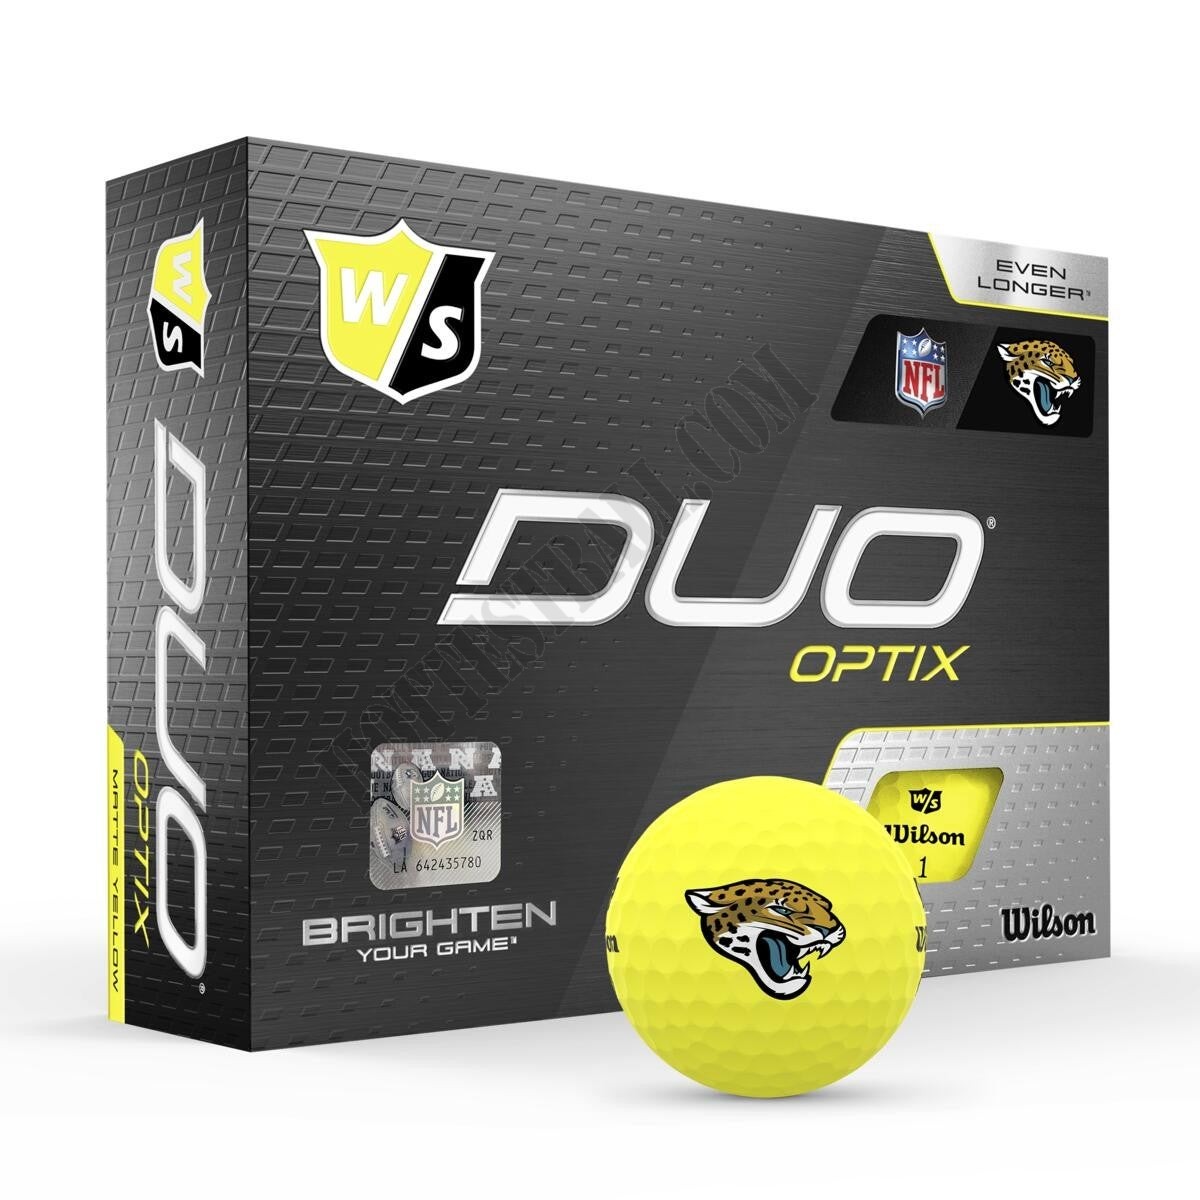 Duo Optix NFL Golf Balls - Jacksonville Jaguars ● Wilson Promotions - Duo Optix NFL Golf Balls - Jacksonville Jaguars ● Wilson Promotions